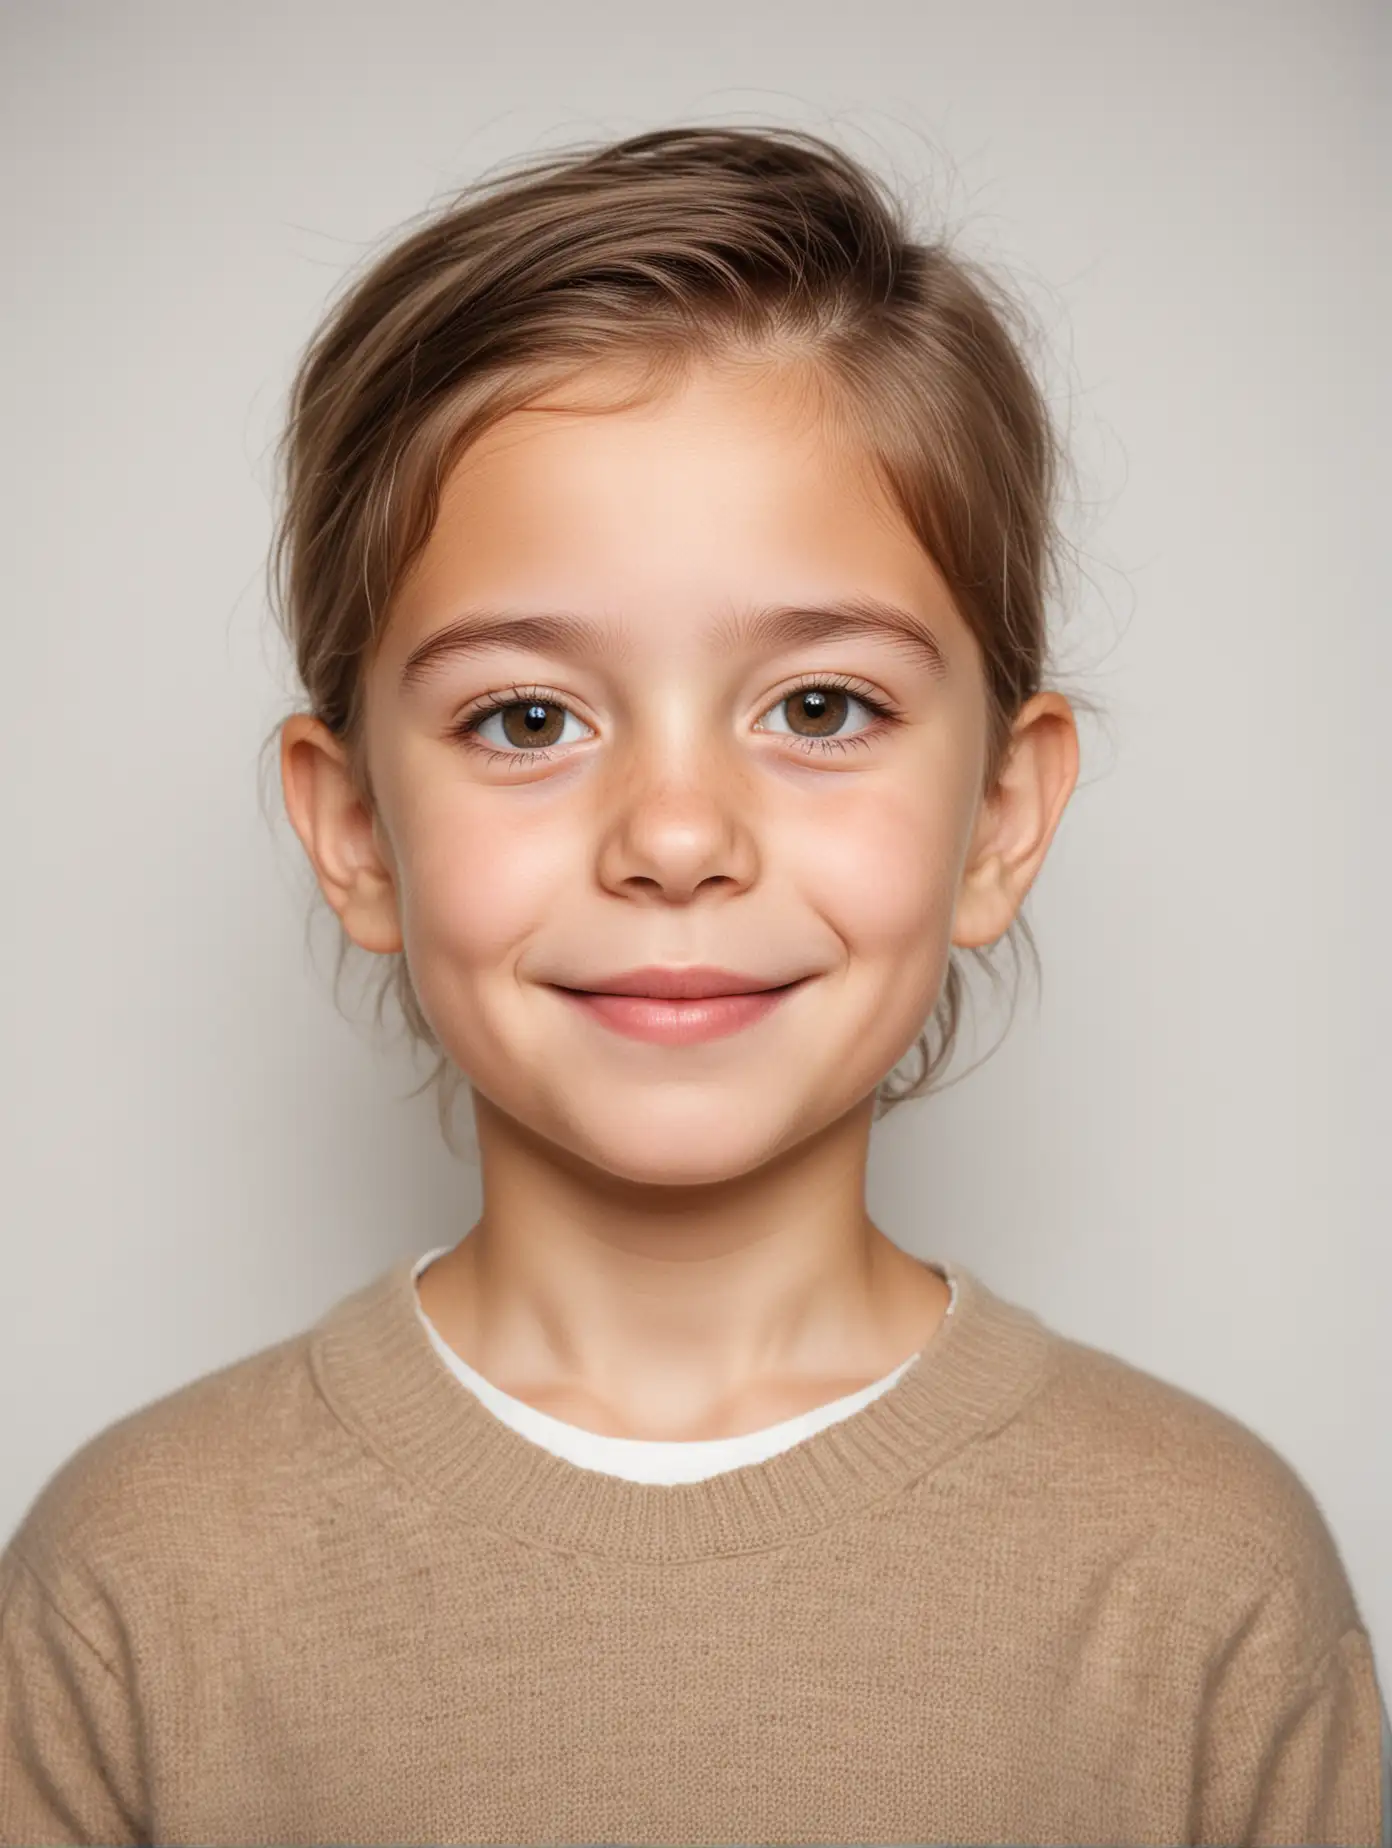 Passport photo for minor  age under 10 un a plain white background 